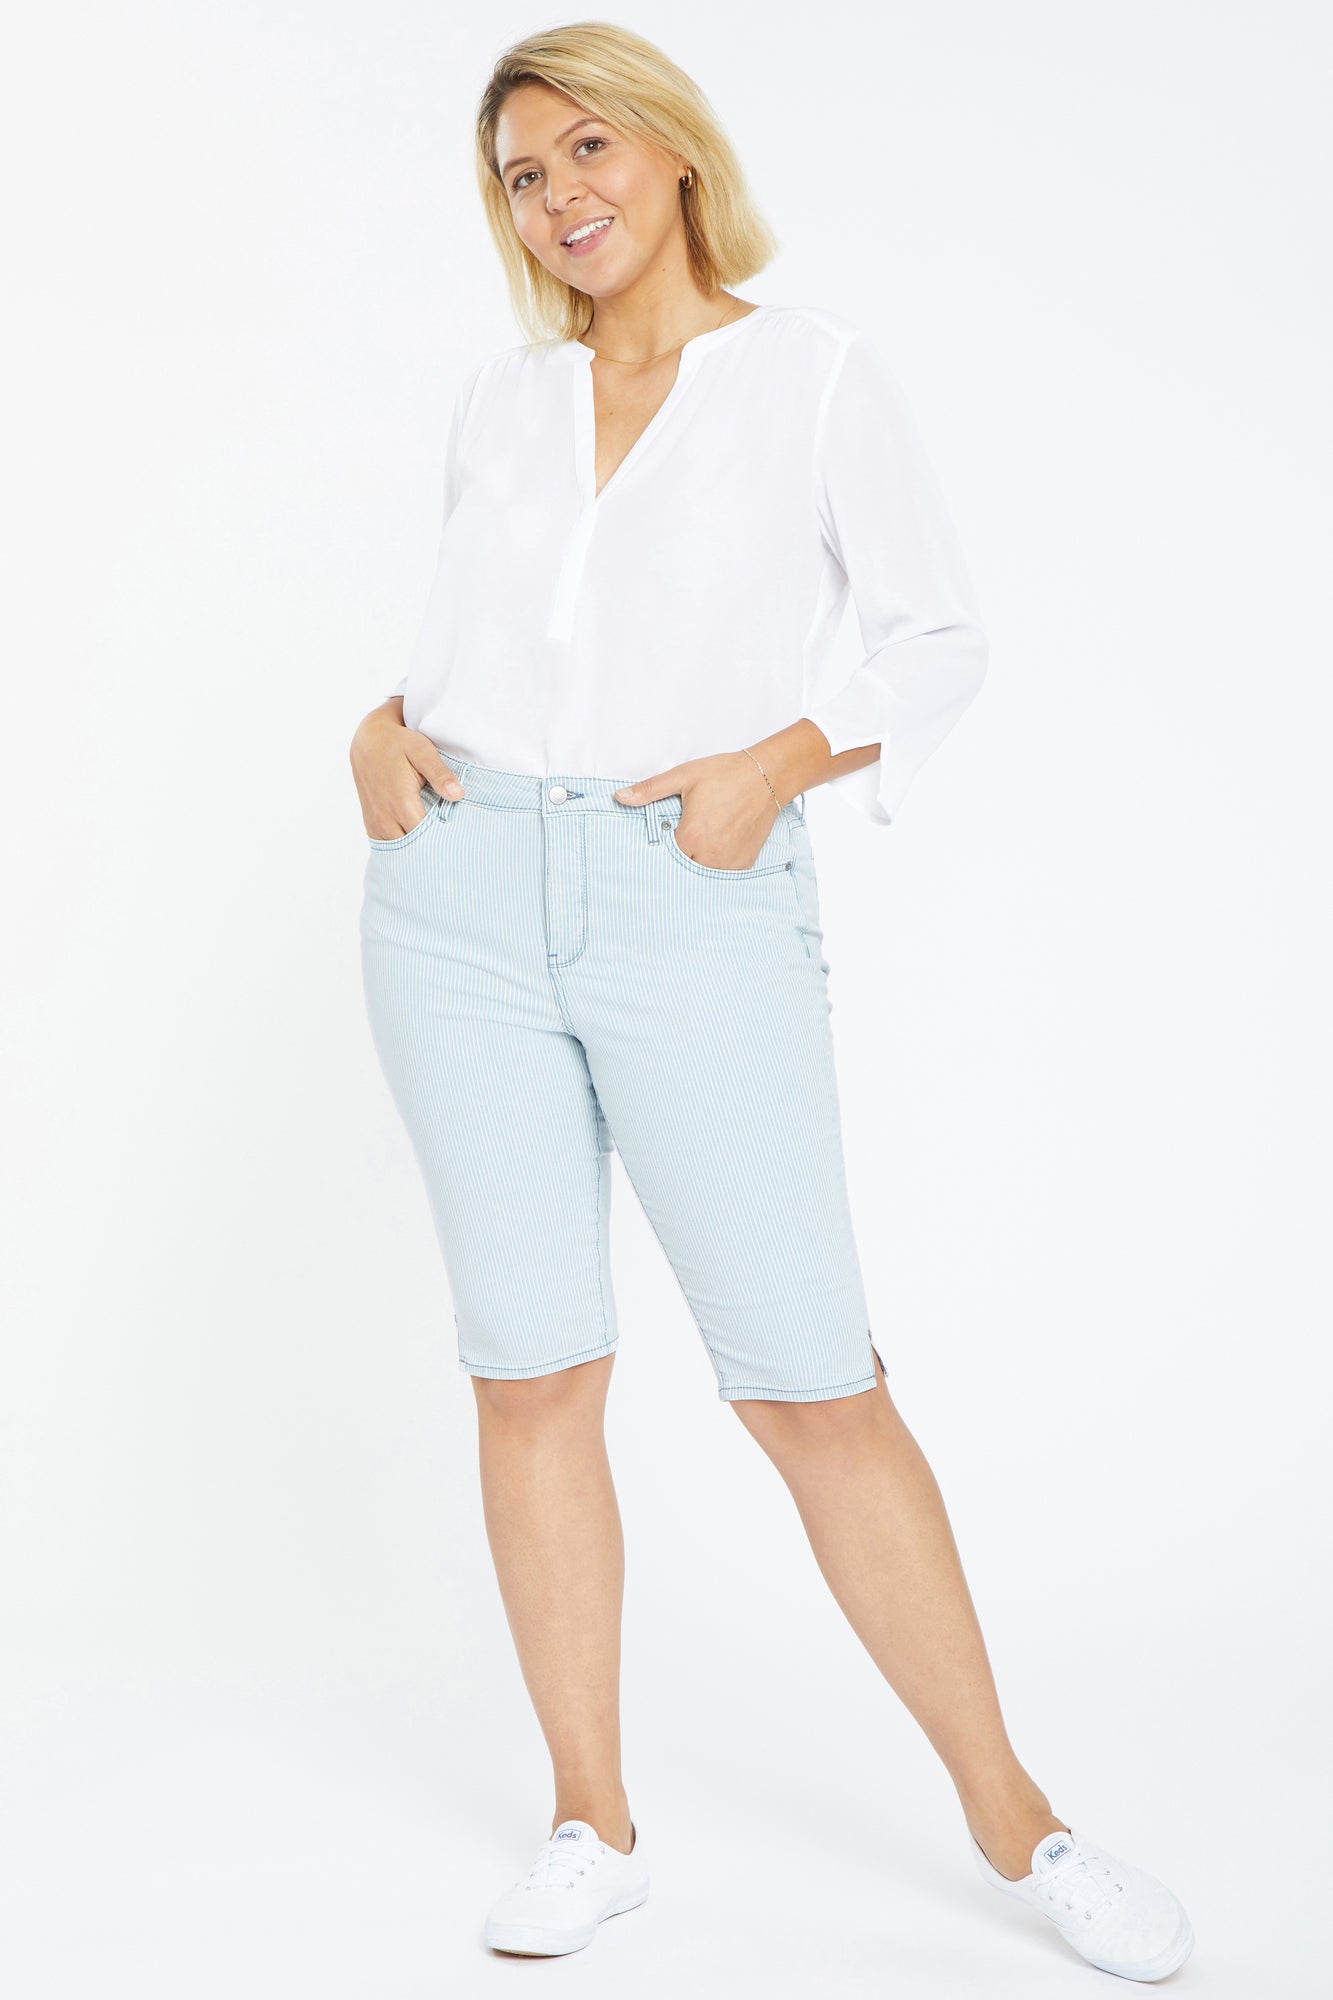 Capri Jeans In Plus Size With Riveted Side Slits - Rena Stripe Blue | NYDJ